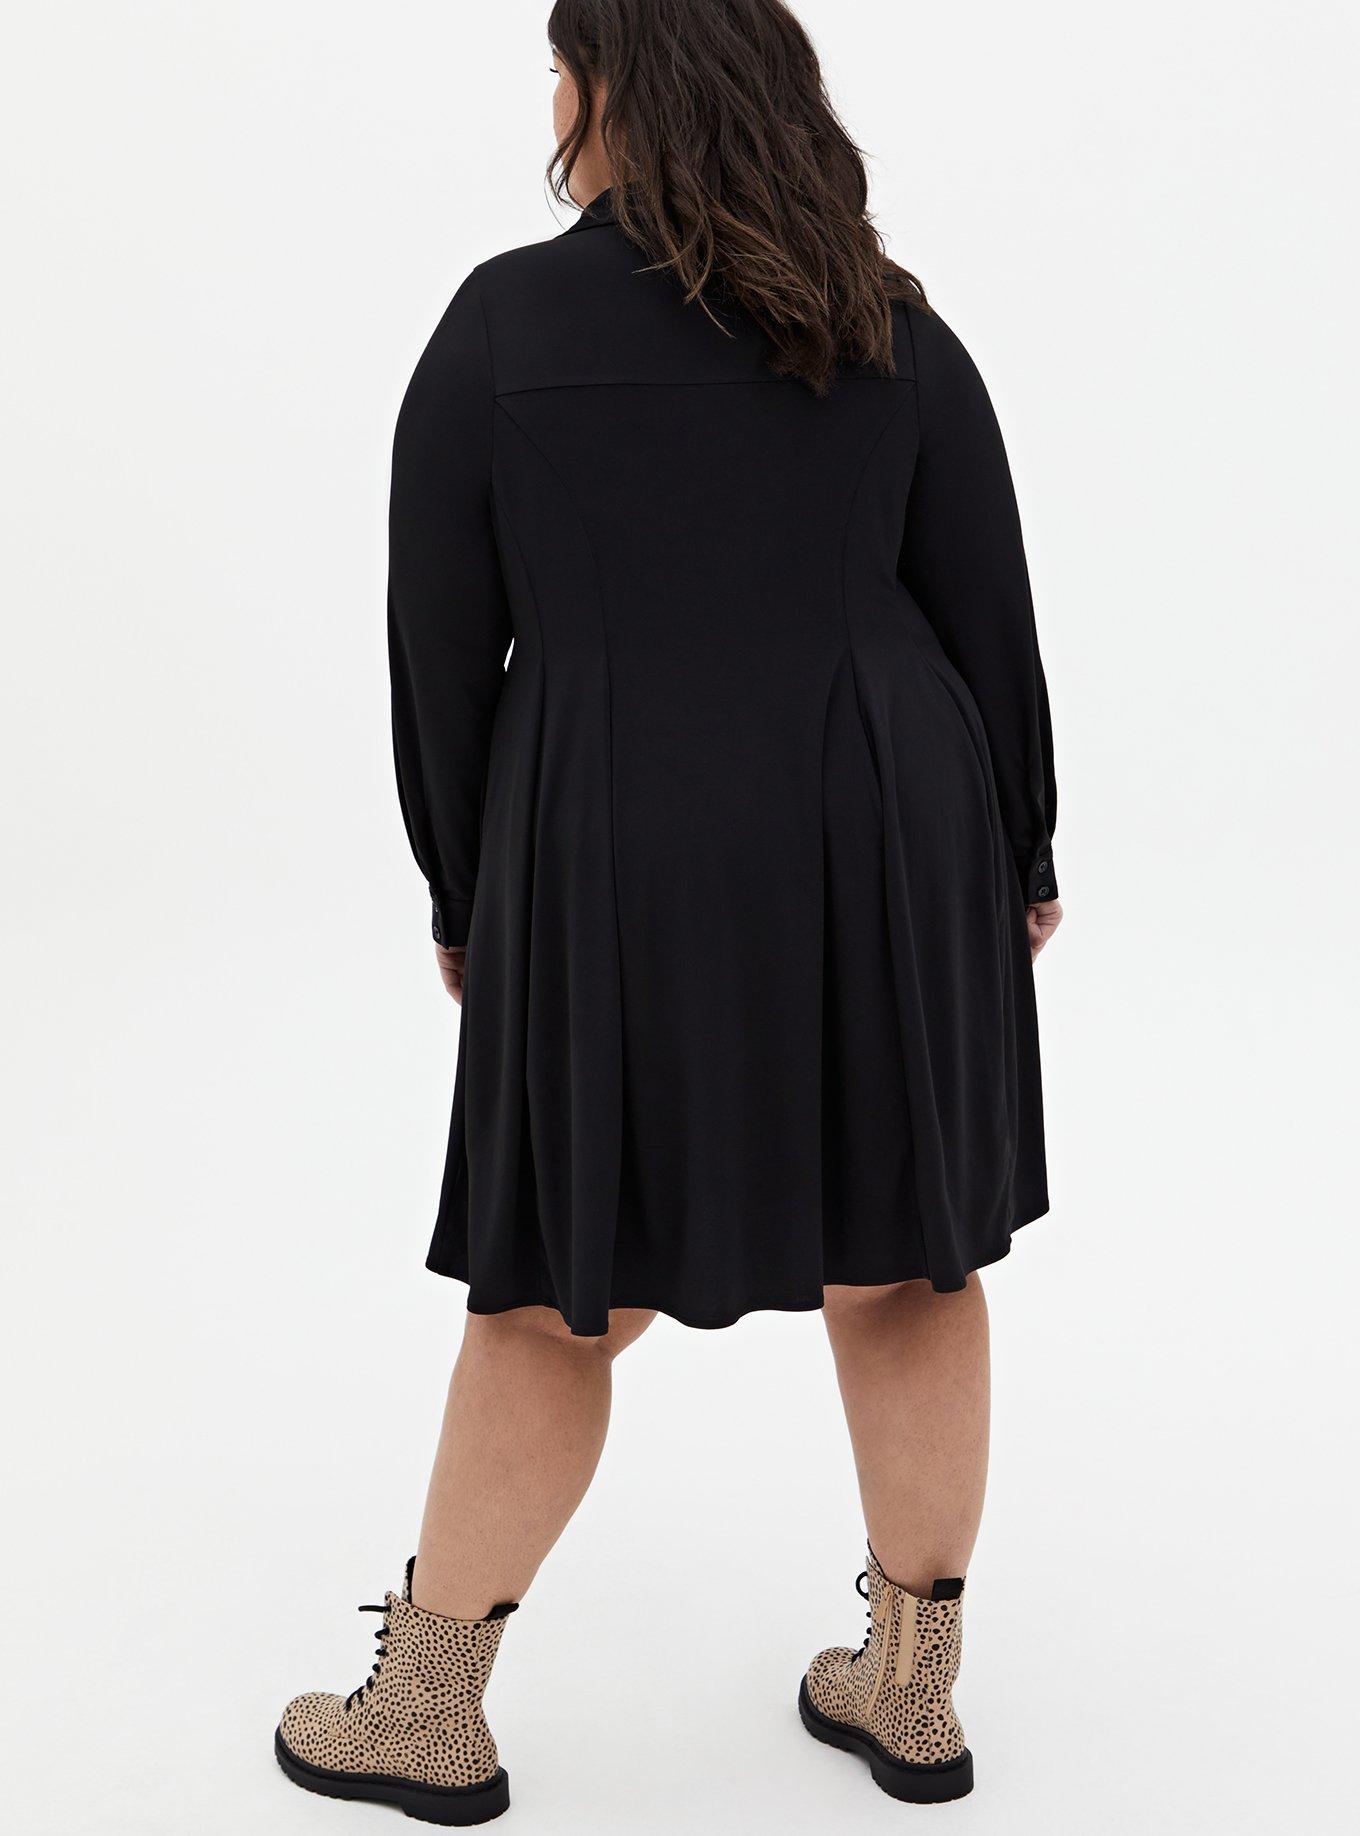 Plus Size - Black Studio Knit A-Line Shirt Dress - Torrid